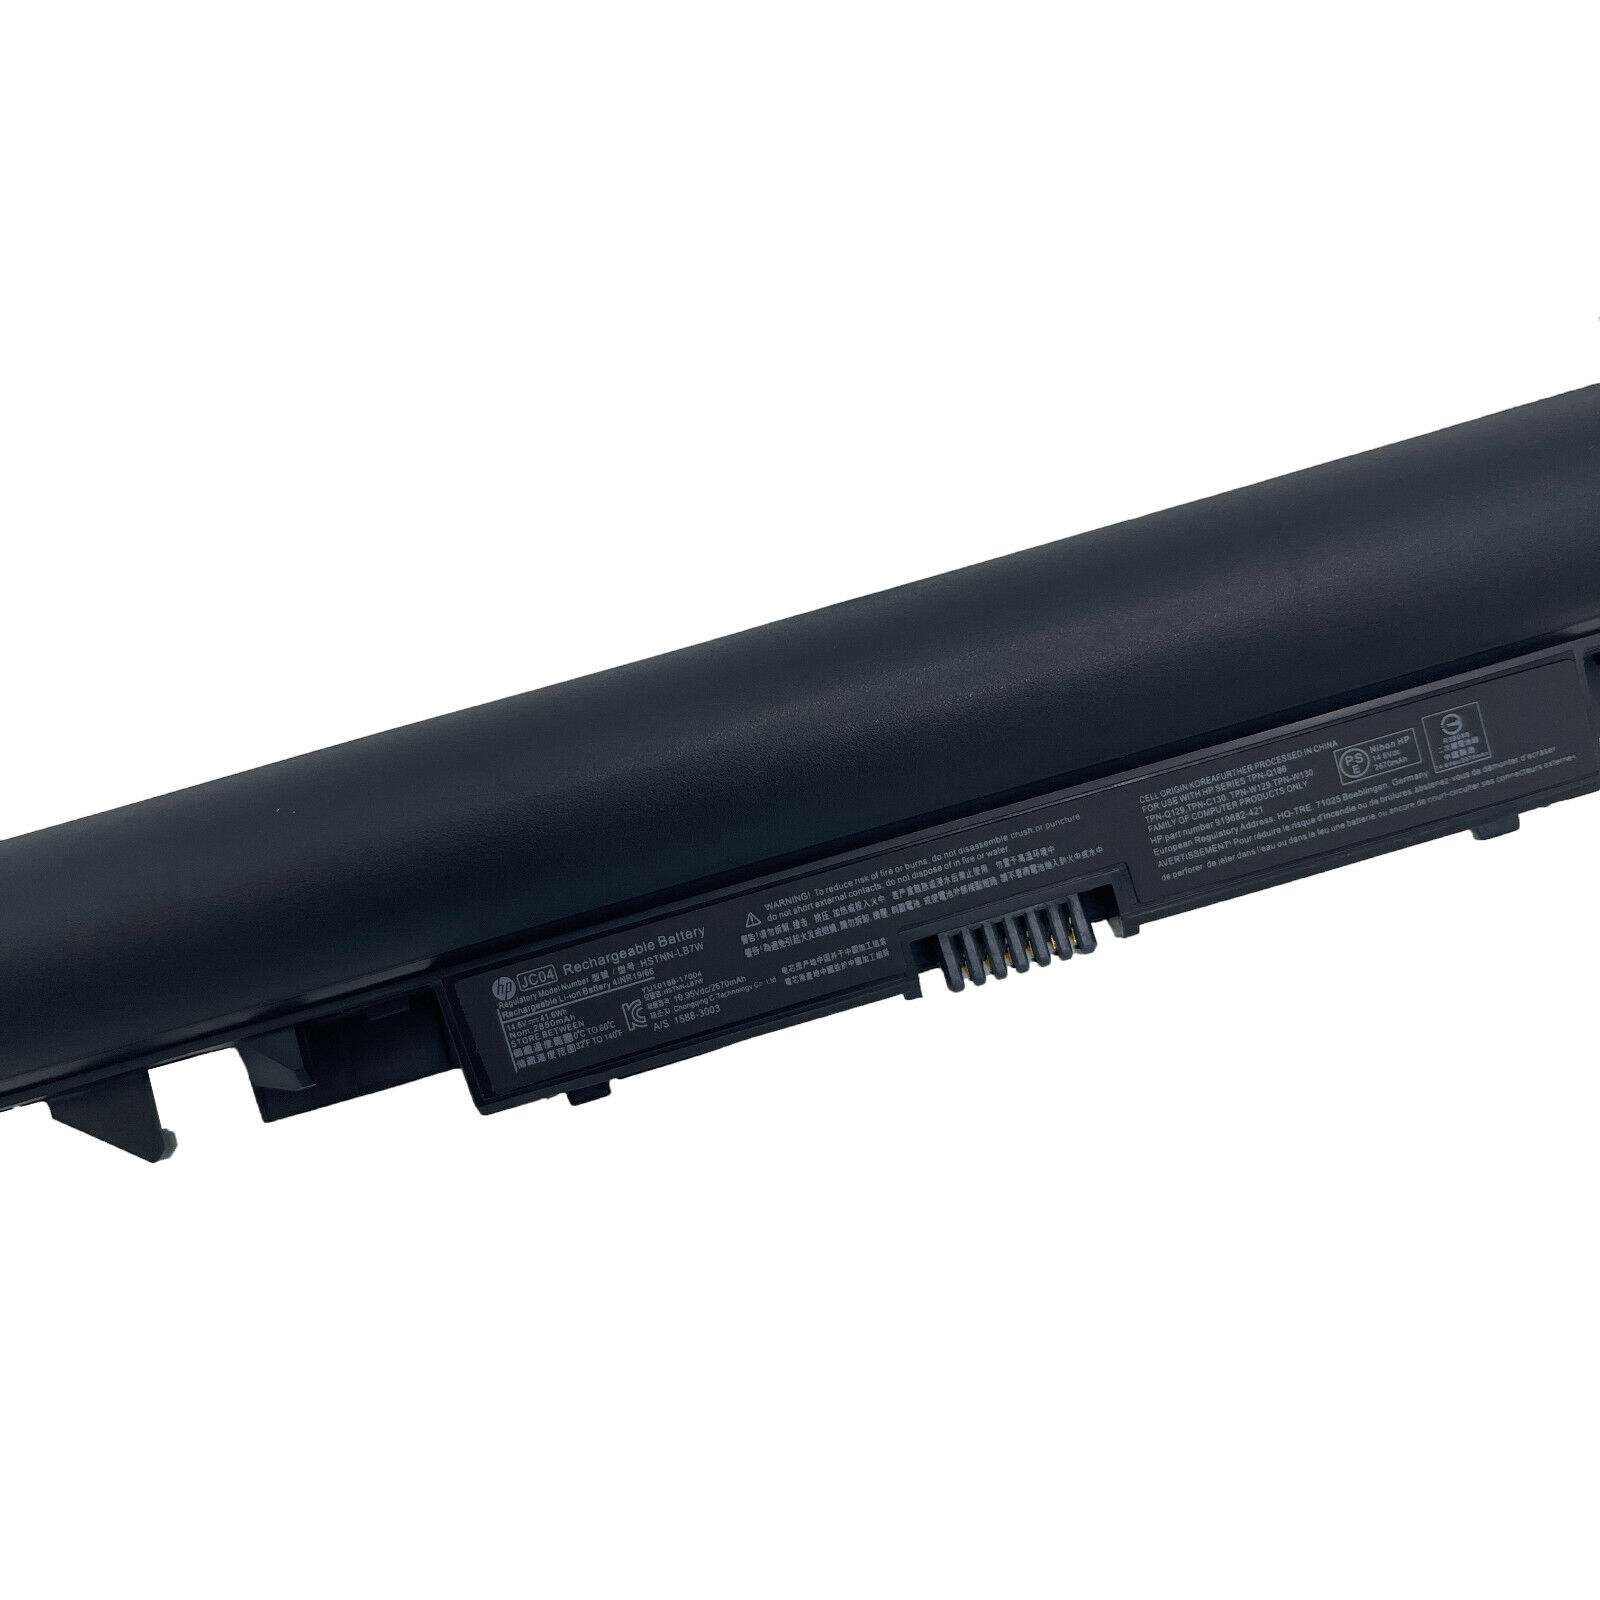 Genuine OEM JC03 JC04 Battery For HP 919700-850 HSTNN-PB6Y HSTNN-LB7V 919701-850